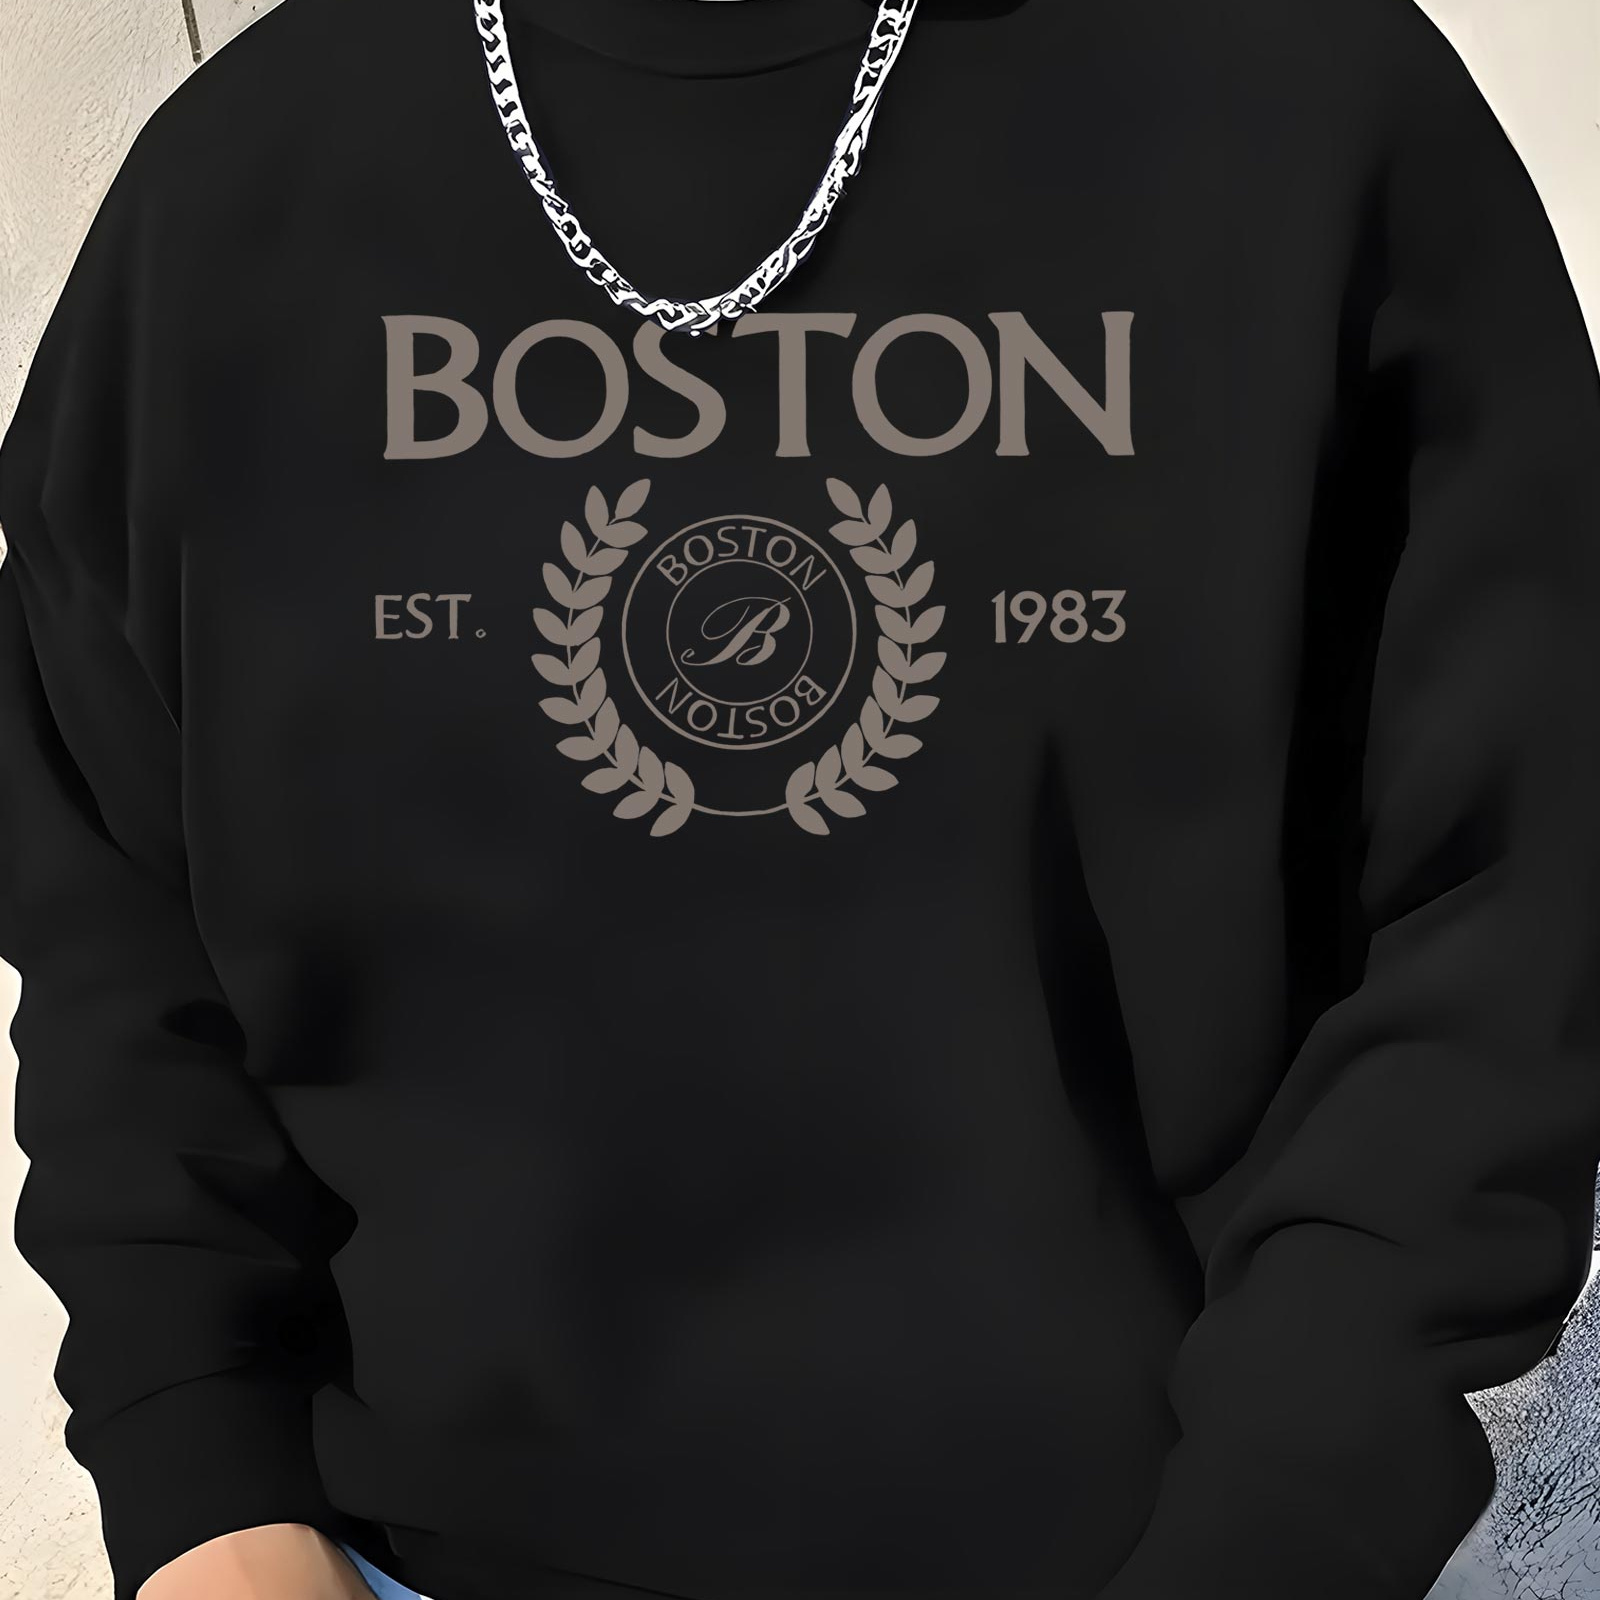 

Boston 1983 Print Men's Sweatshirt, Casual Long Sleeve Comfy Sweatshirt, Fashion Top For Outdoor And Daily Wear